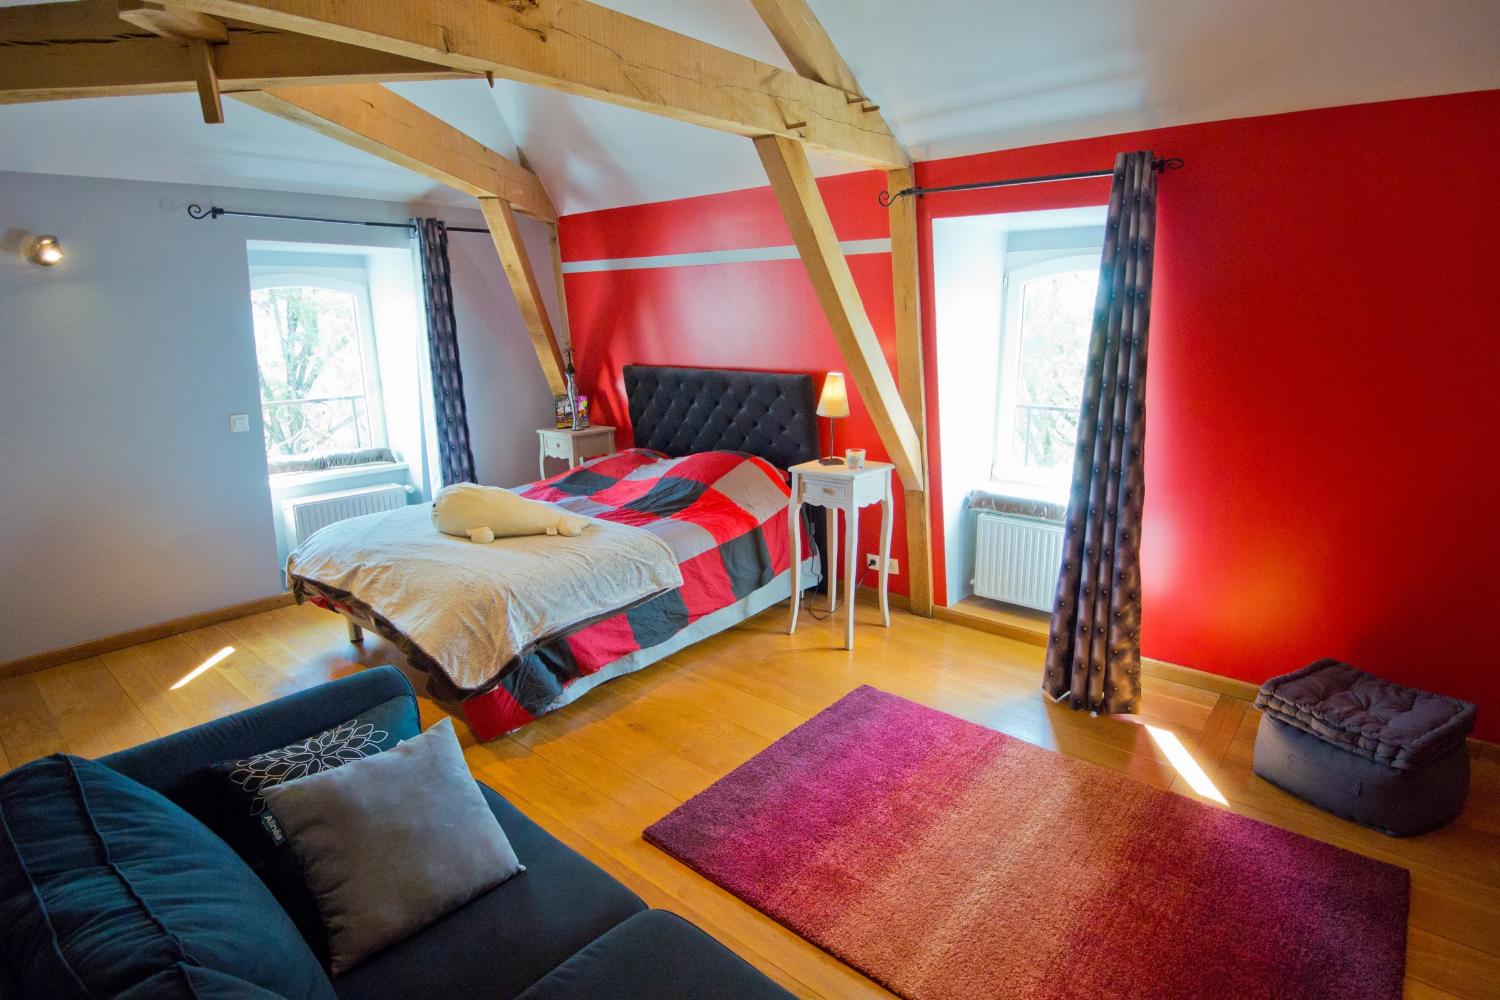 Bedroom | Rental home in the Lot